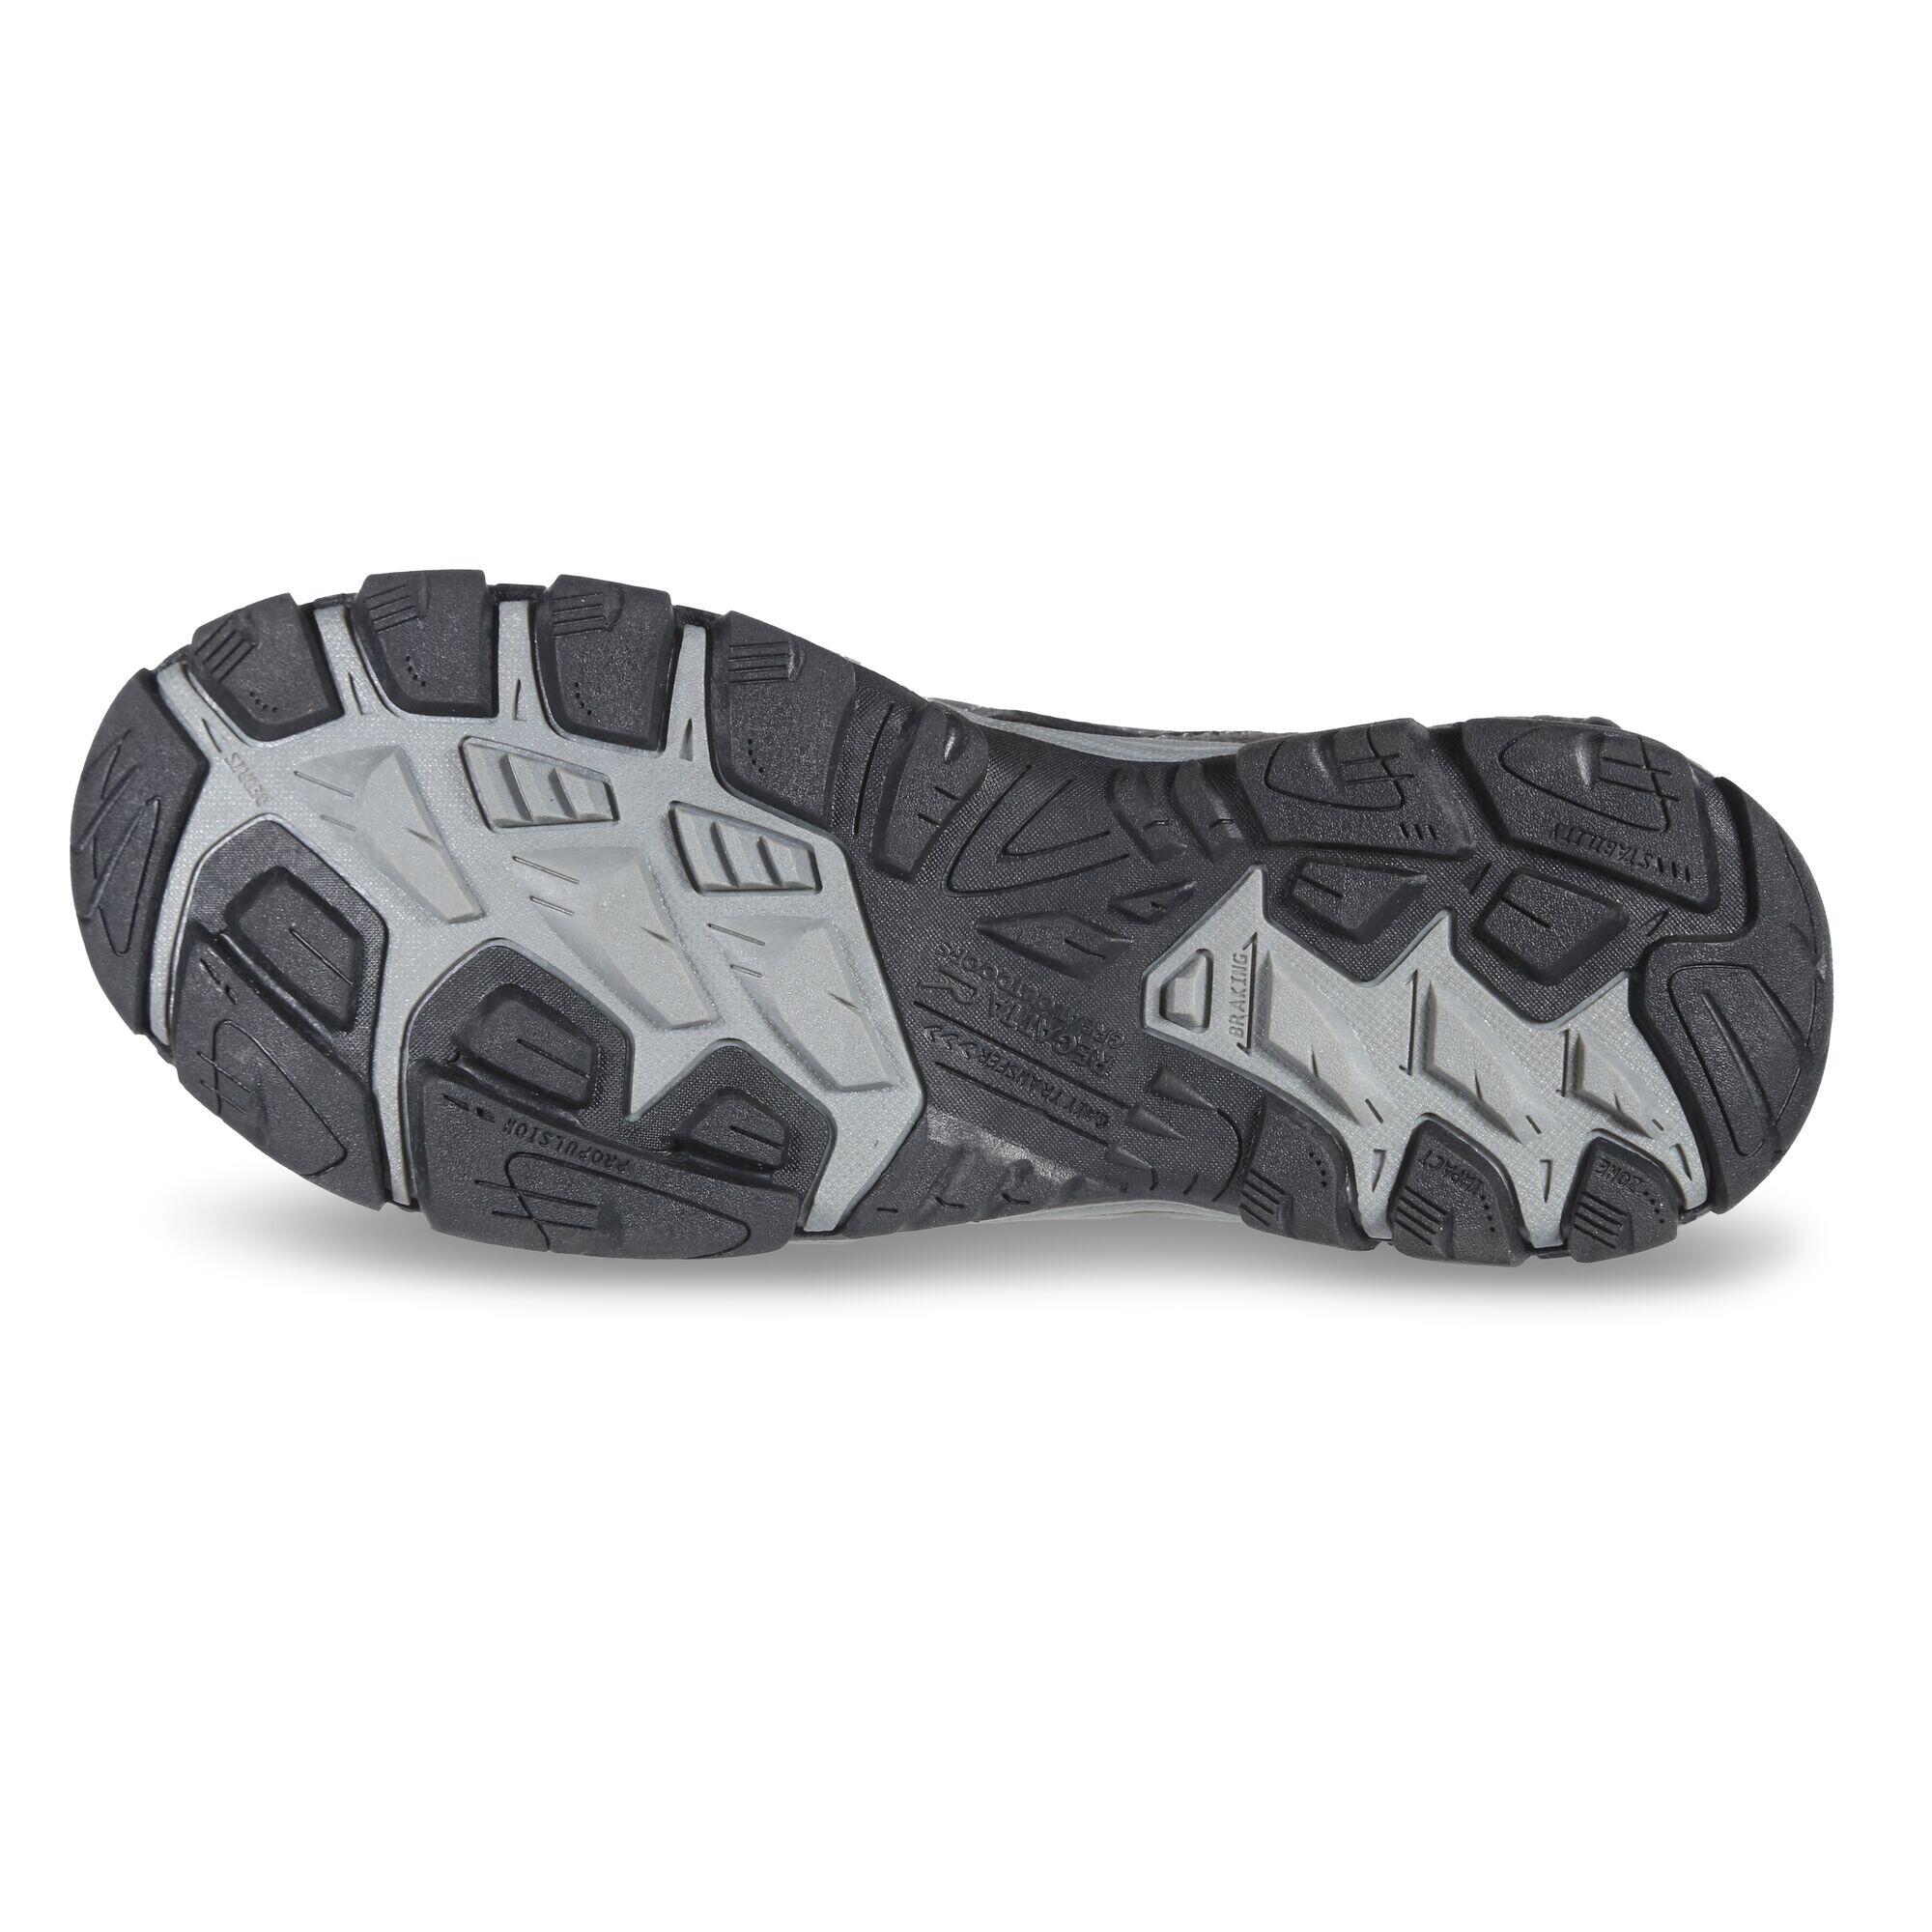 Westshore 3 Men's Hiking Sandals - Briar Grey 5/6